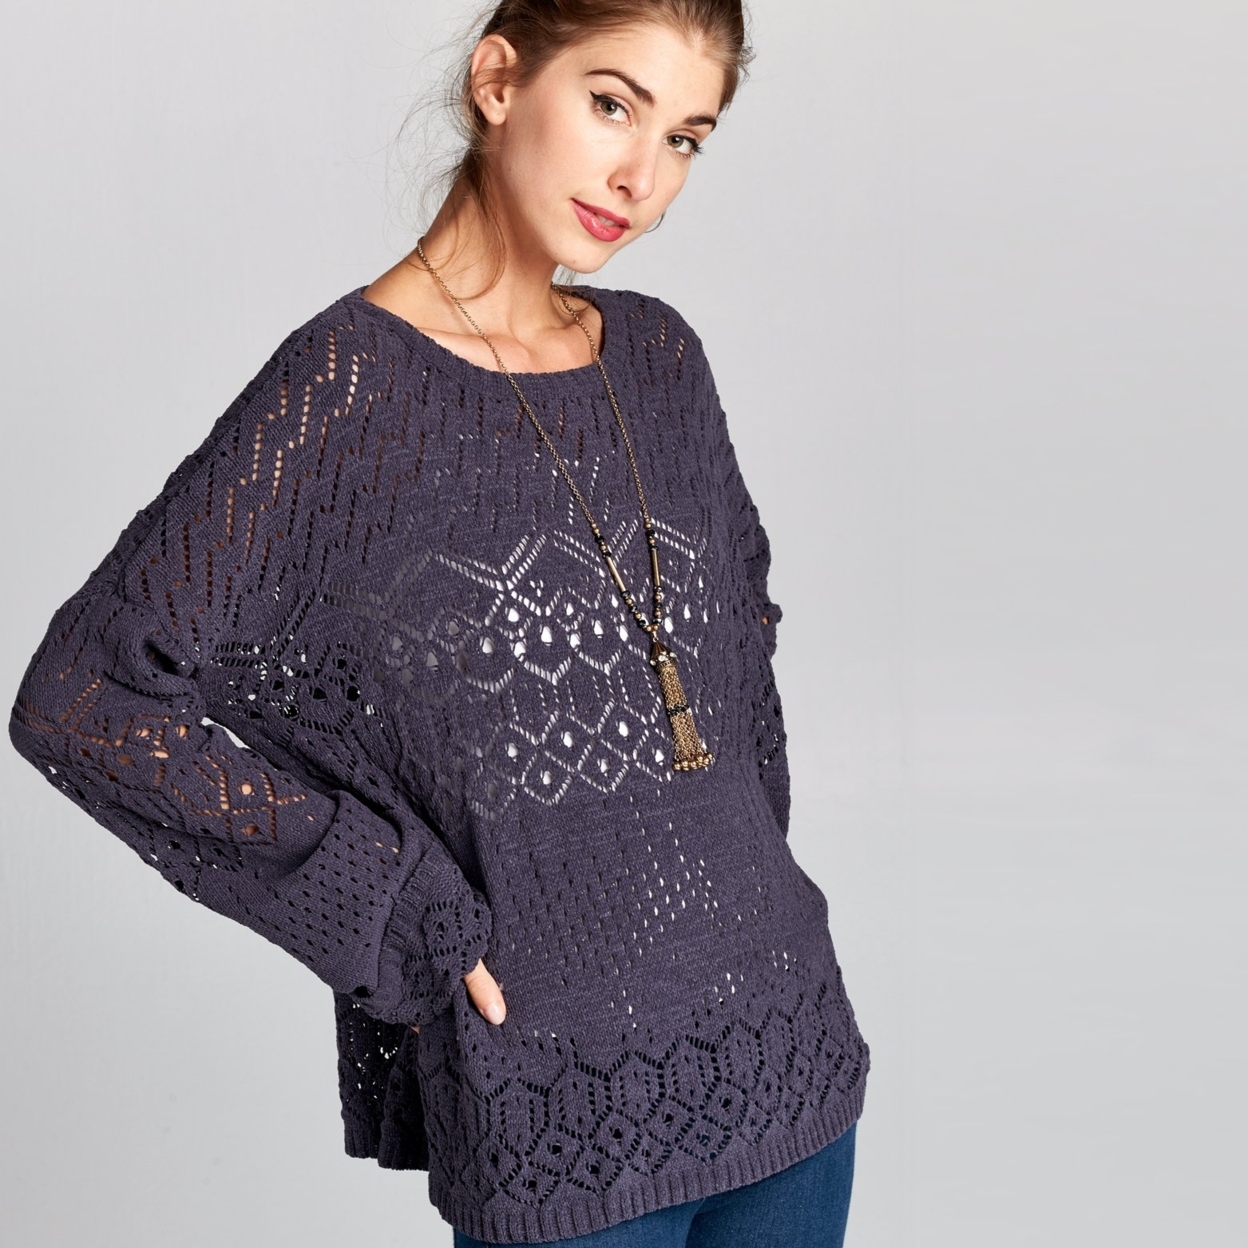 Crochet Knit Sweater - Charcoal, Large (12-14)